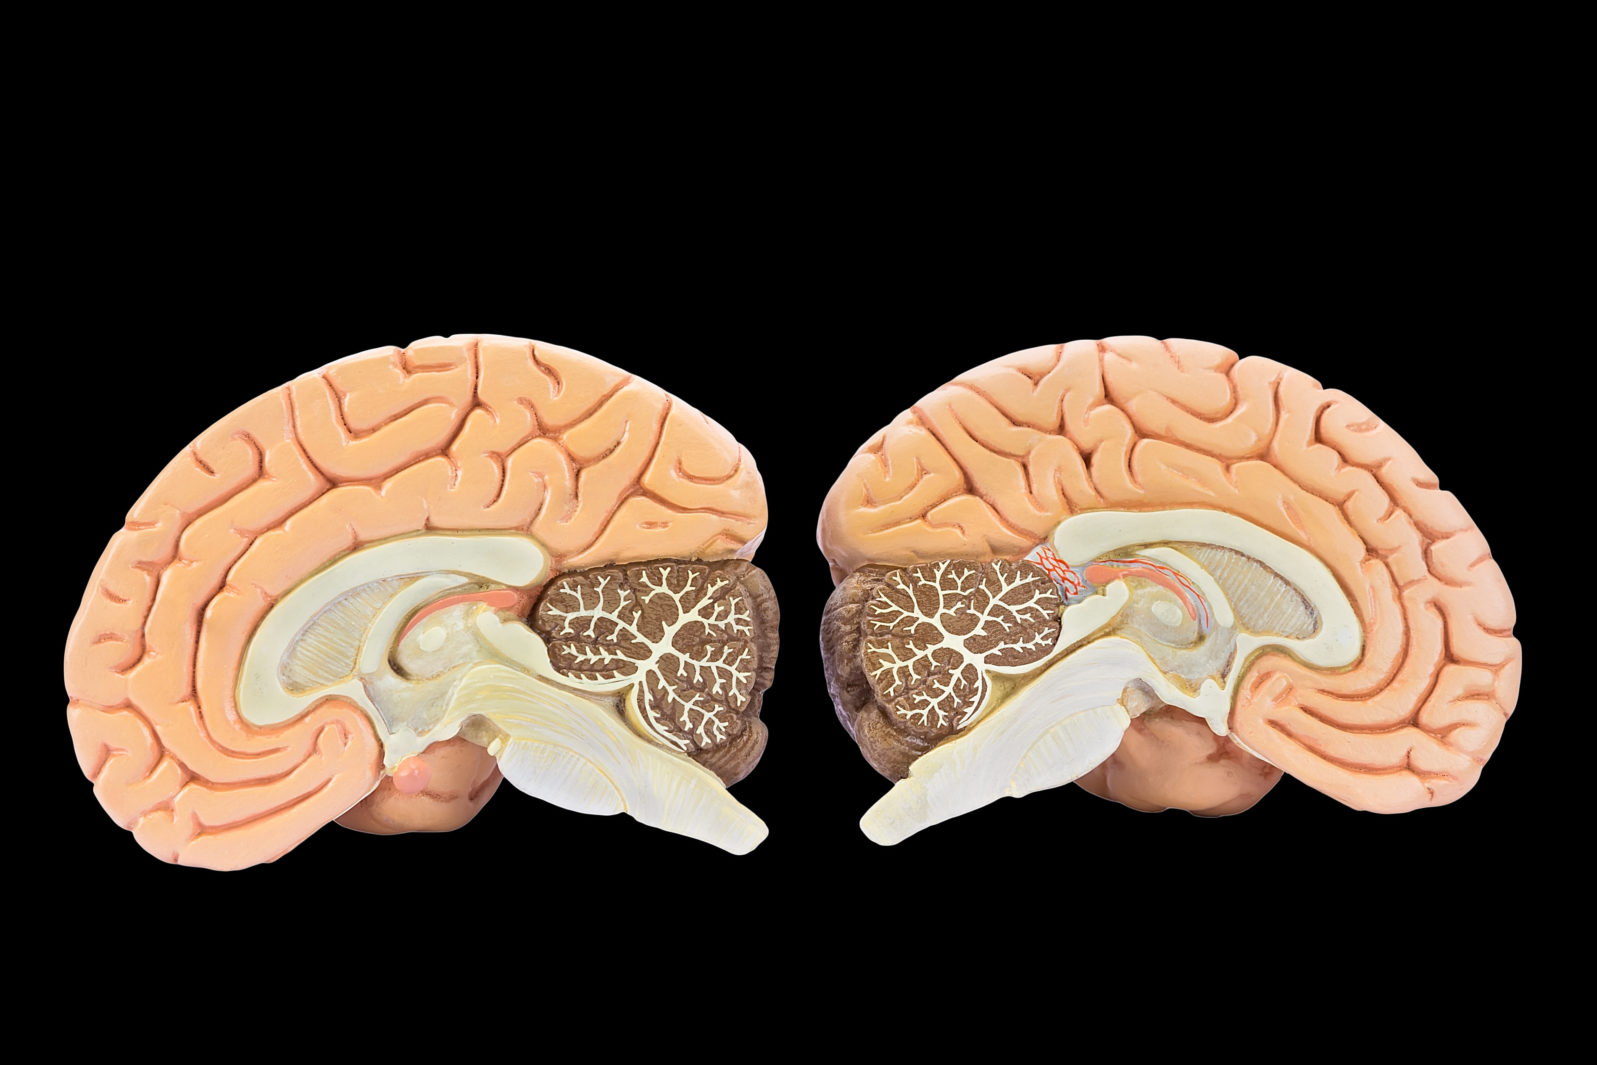 Models of two brain halves on black background